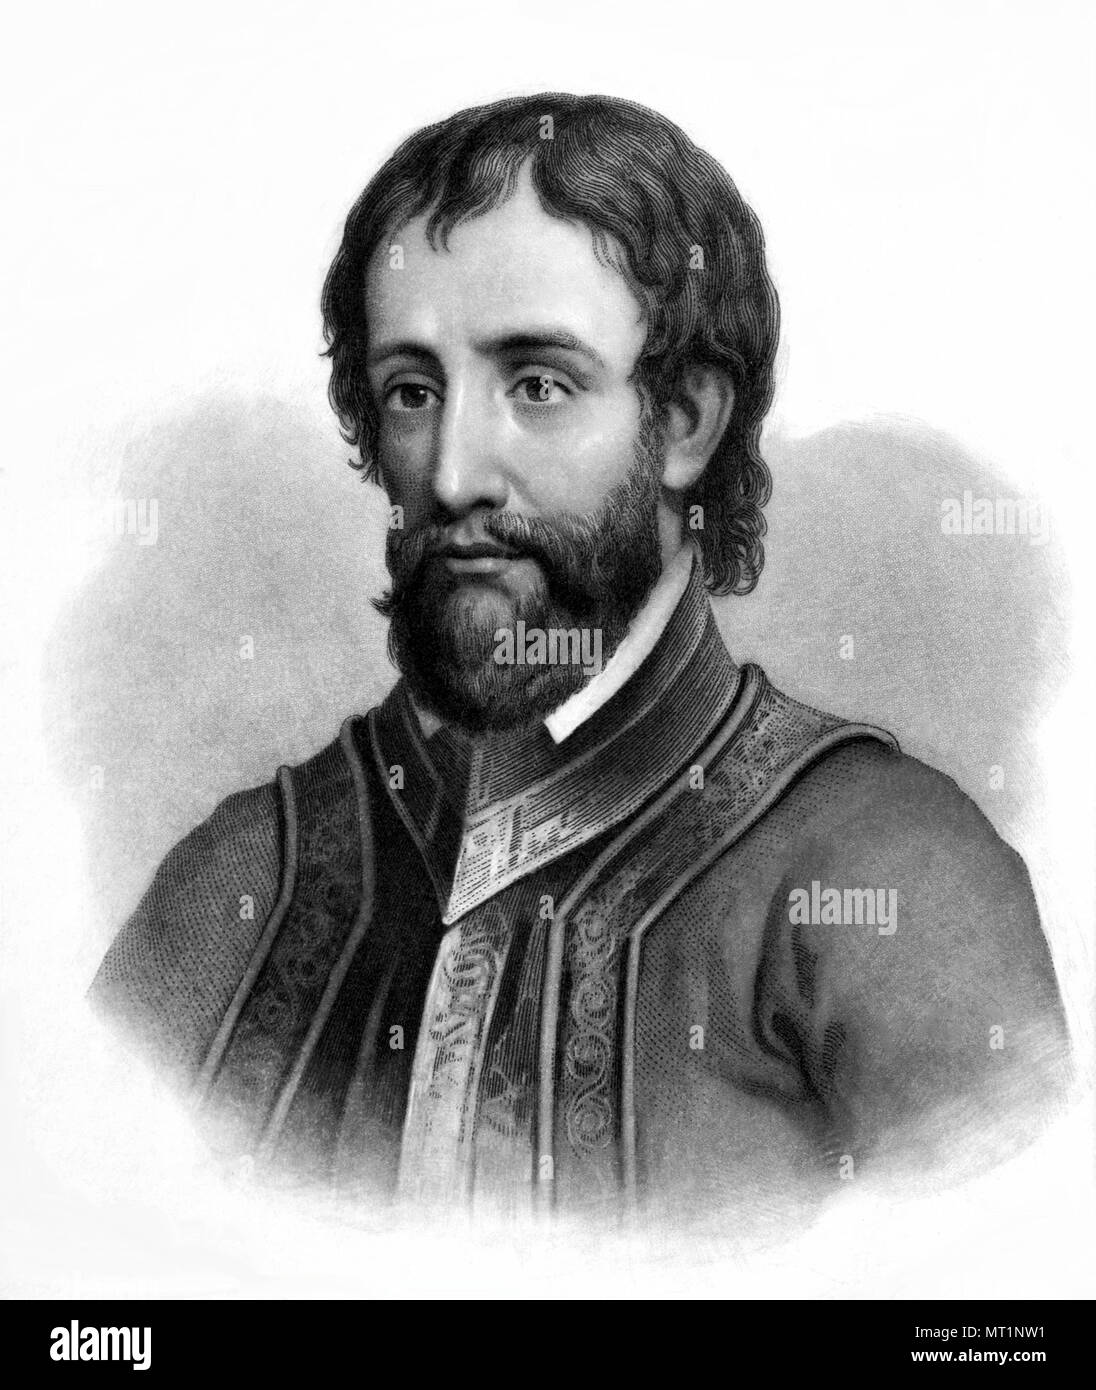 Hernando de Soto (1495 - 1542) explorador español Foto de stock